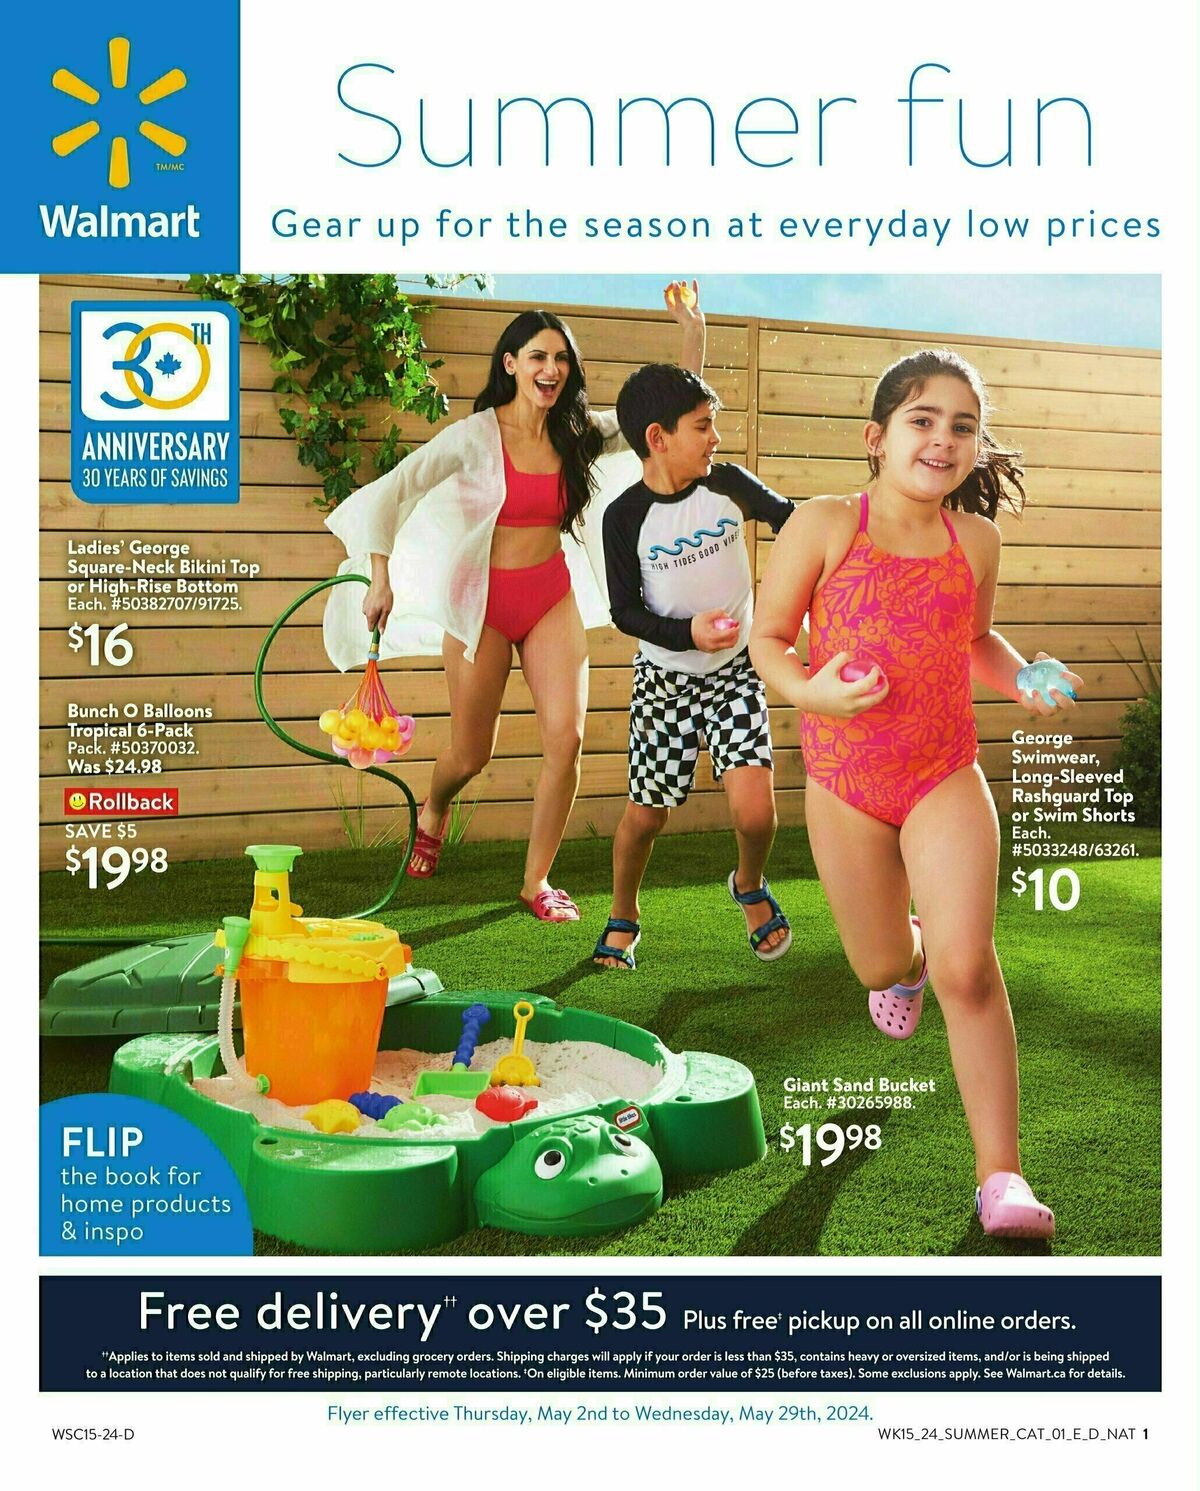 Walmart Summer Fun Flyer from May 2